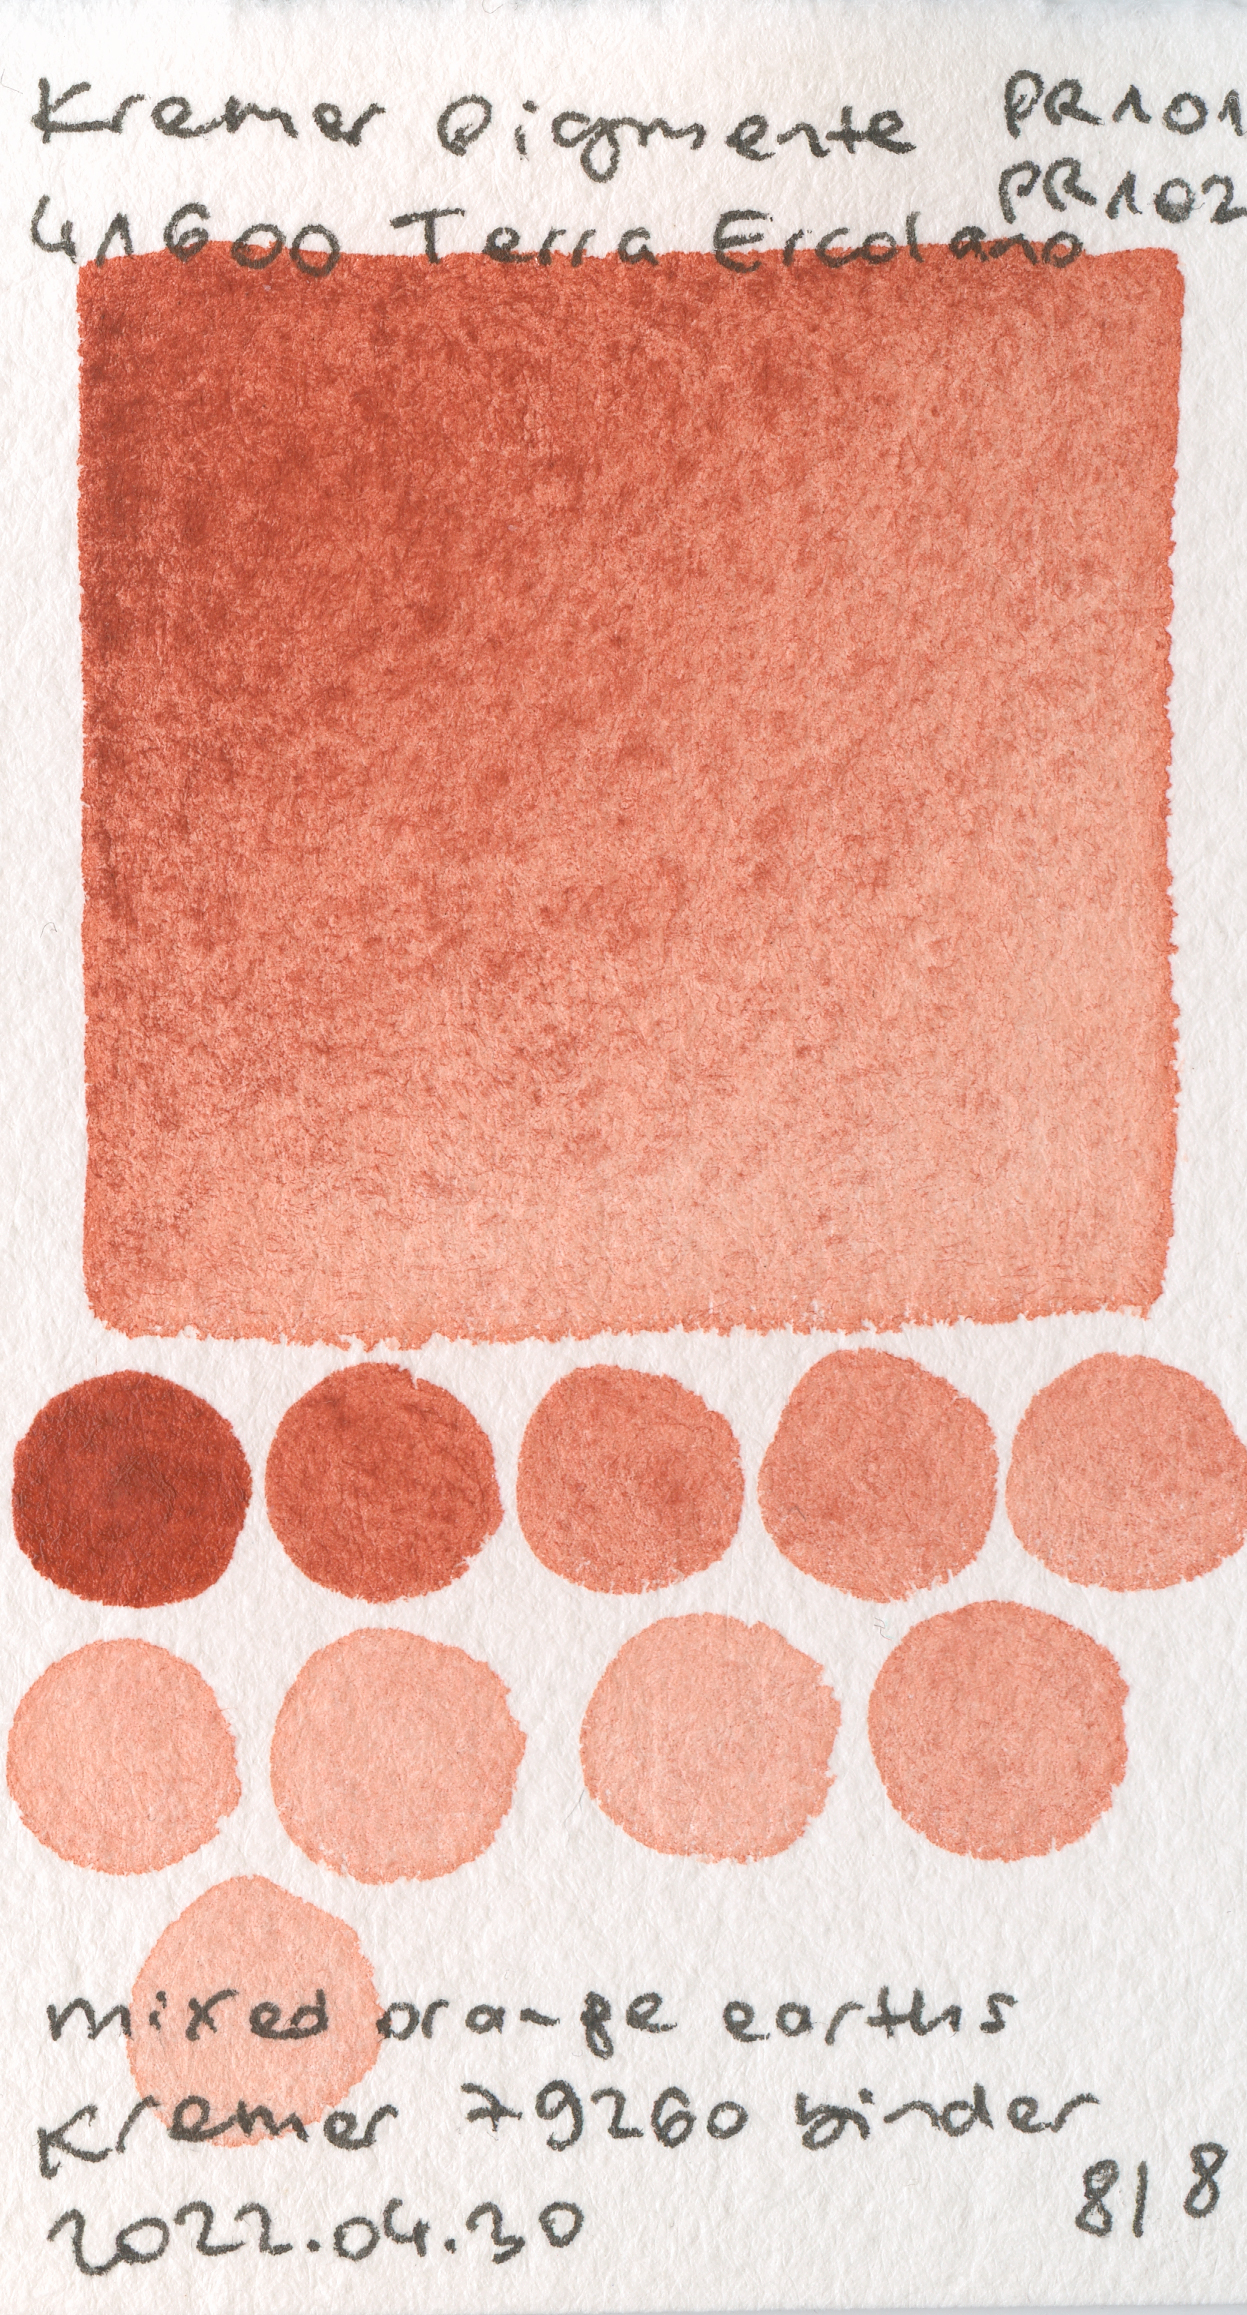 Kremer Pigmente [Dry] Pigments 41600 Terra Ercolano PR101 watercolor swatch